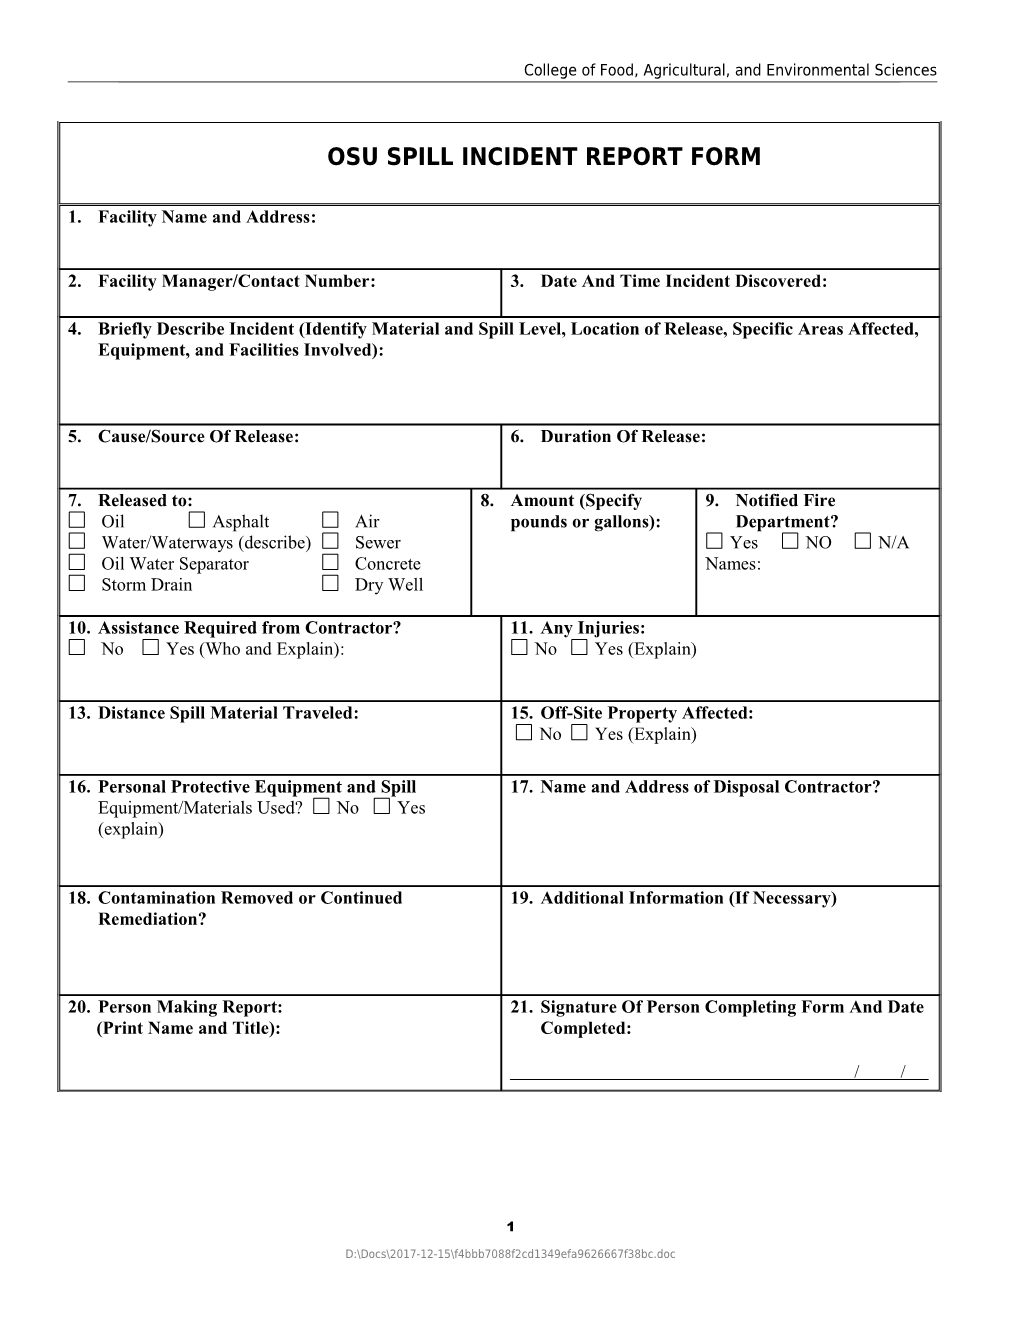 Rsc Spill Incident Report Form